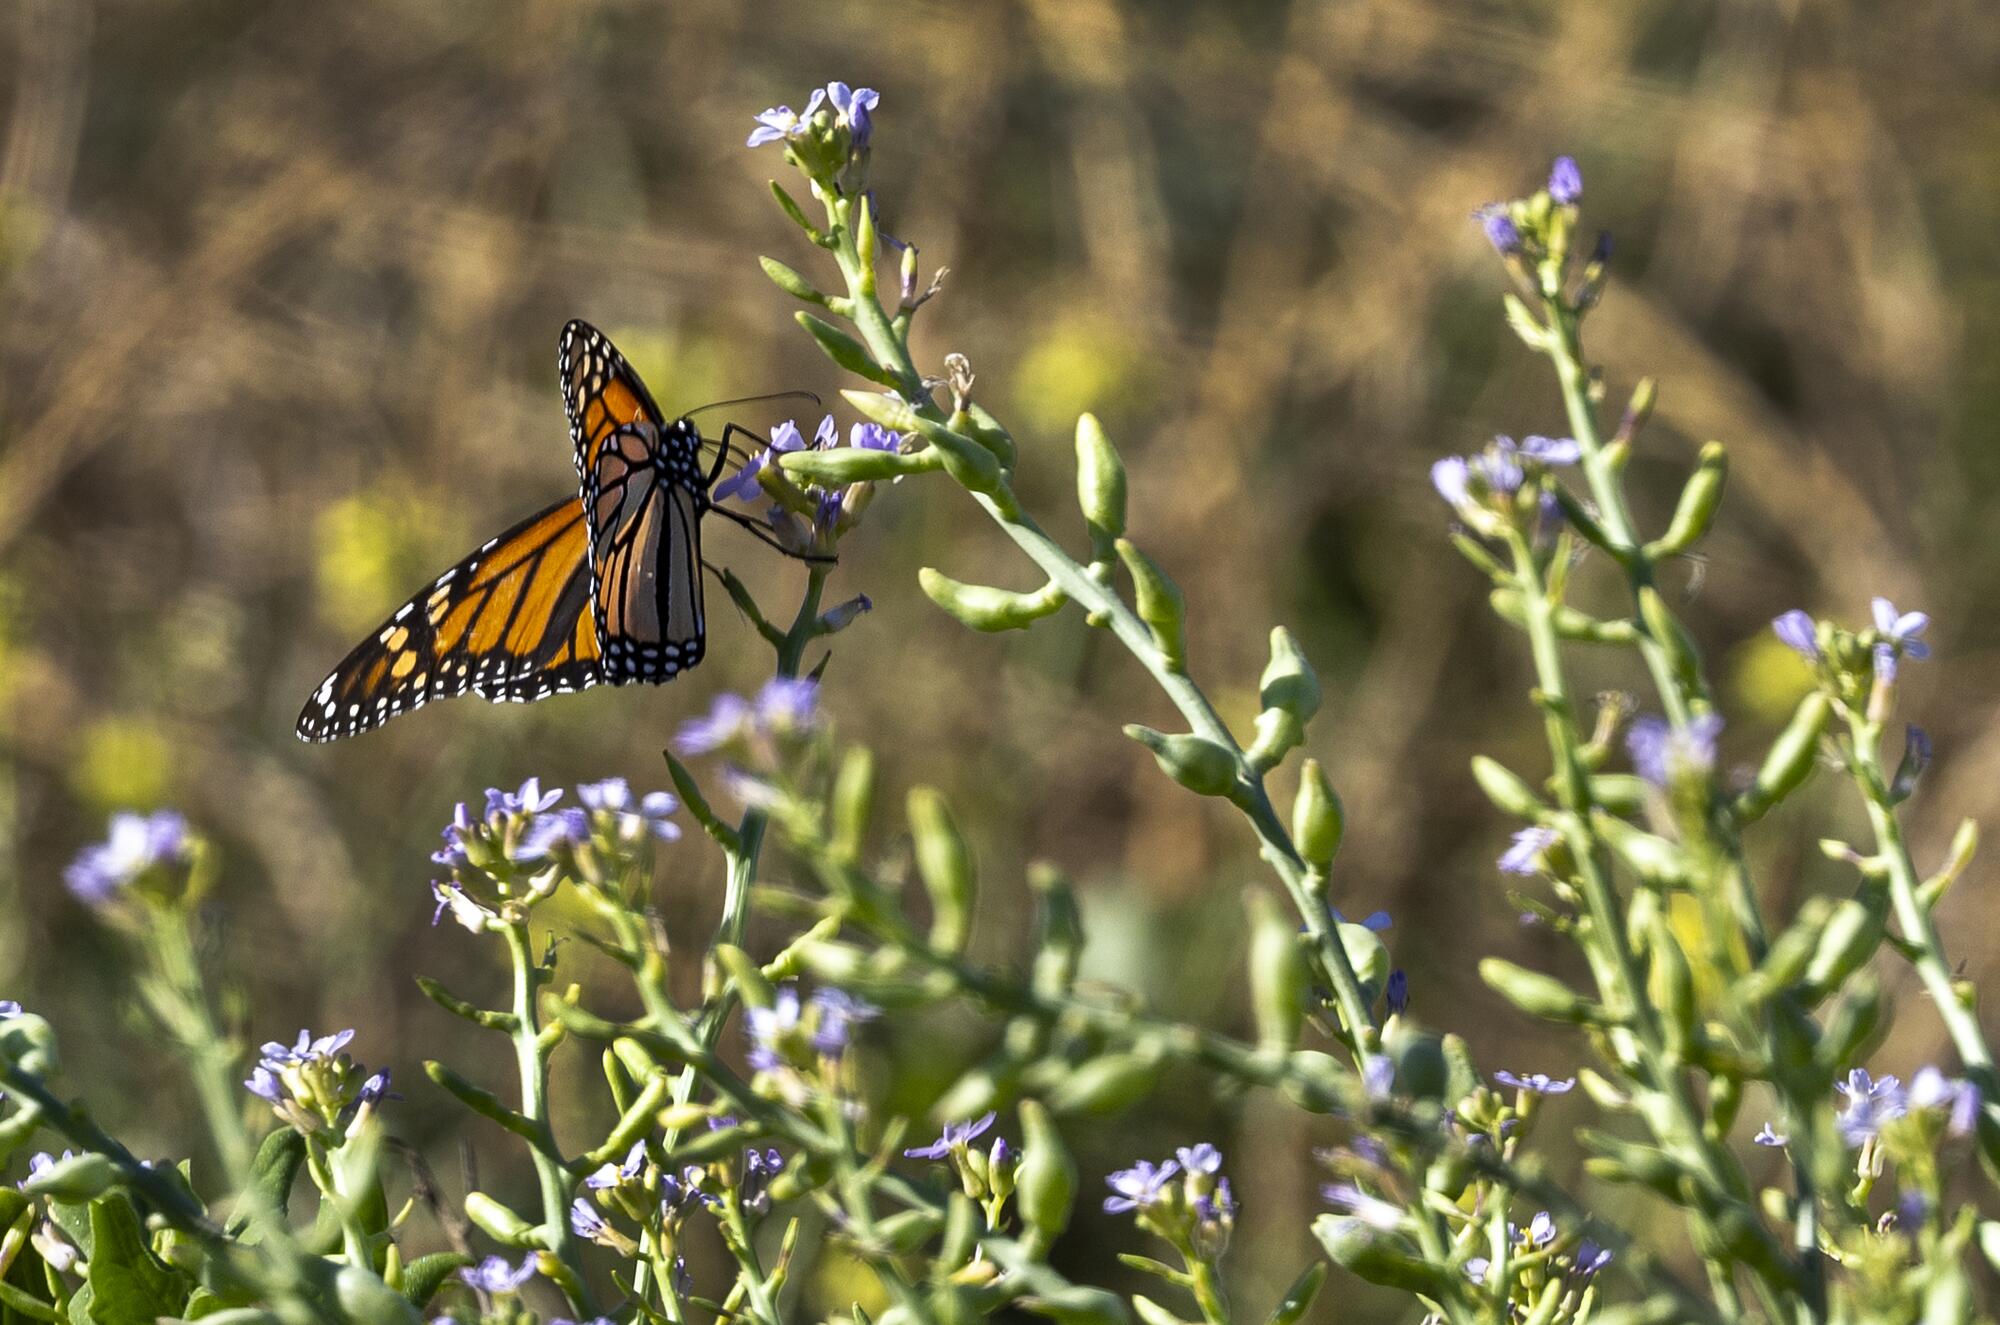 A Monarch butterfly lands on flowers.